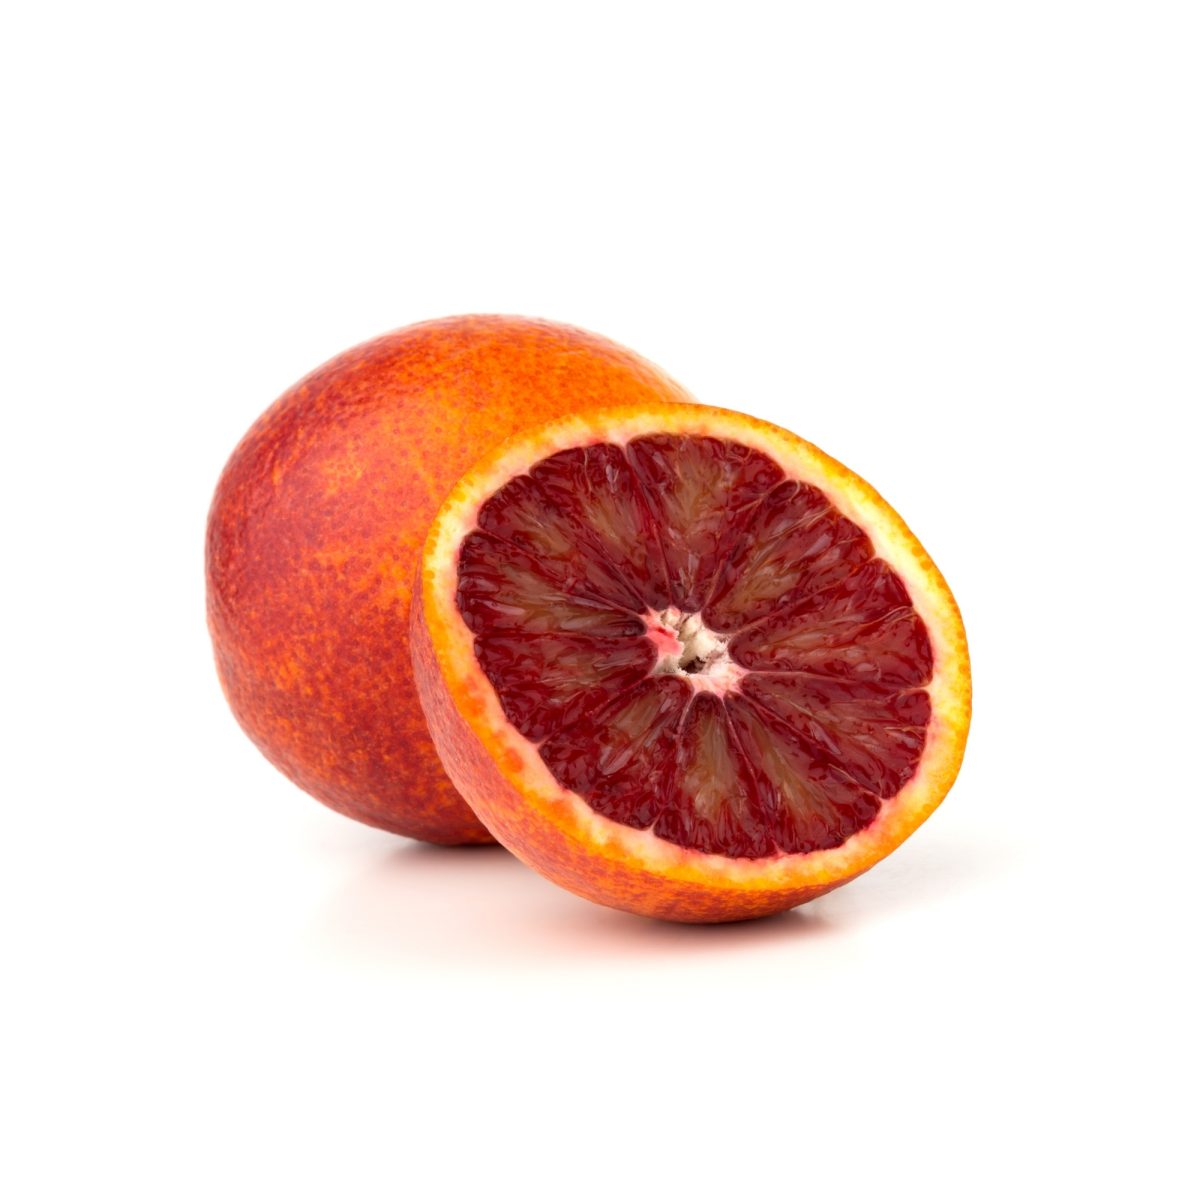 Image of juicy deep crimson flesh of sliced Moro Blood Orange Tree